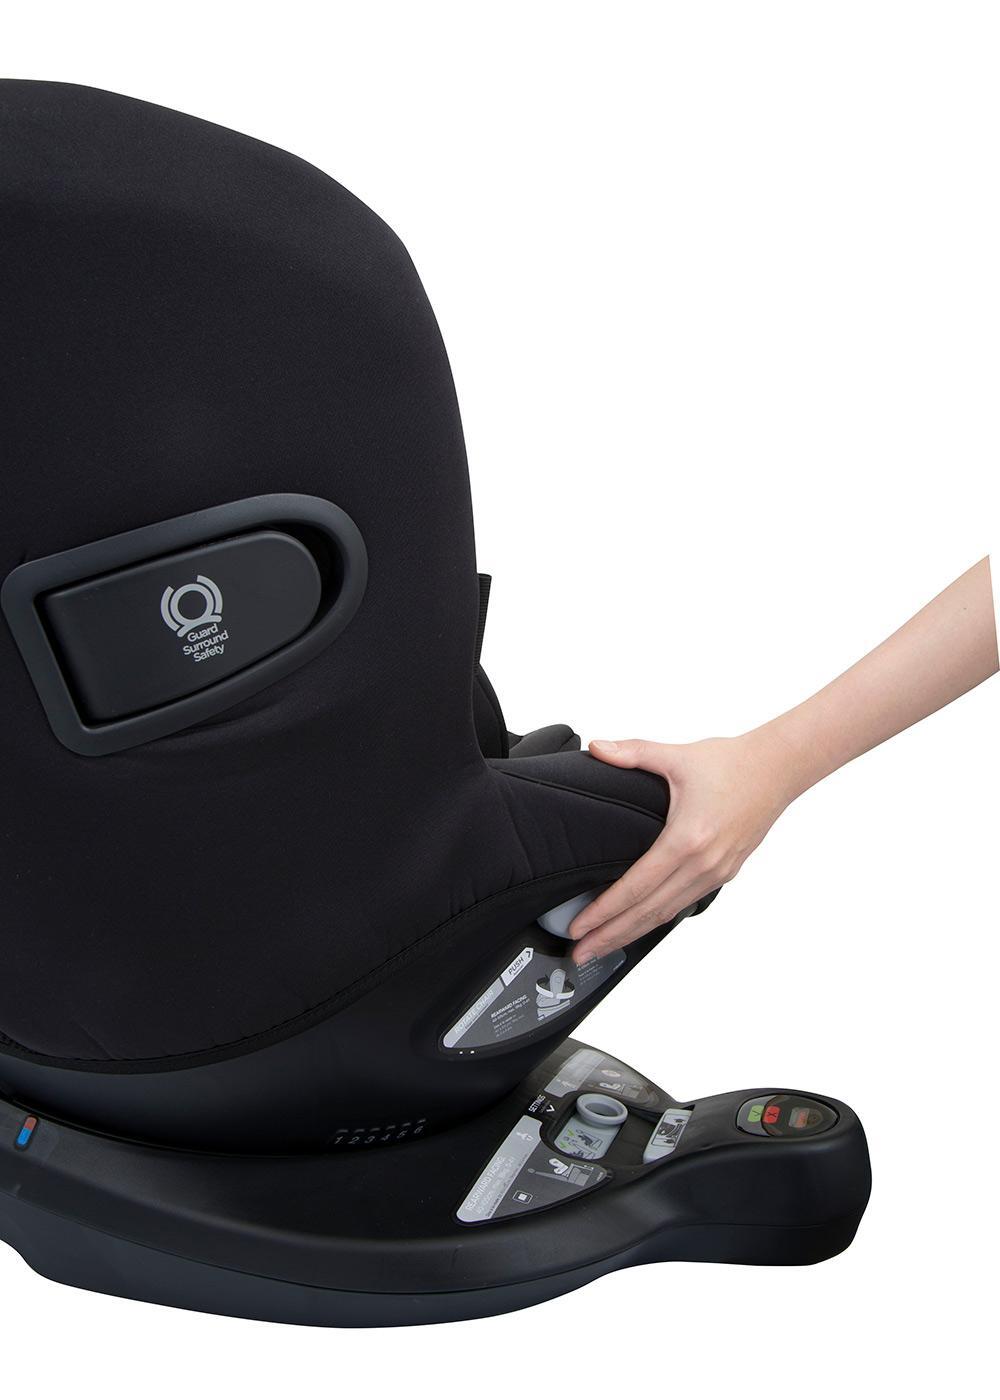 Joie I-Spin 360 isofix car seat (40-105cm), Coal